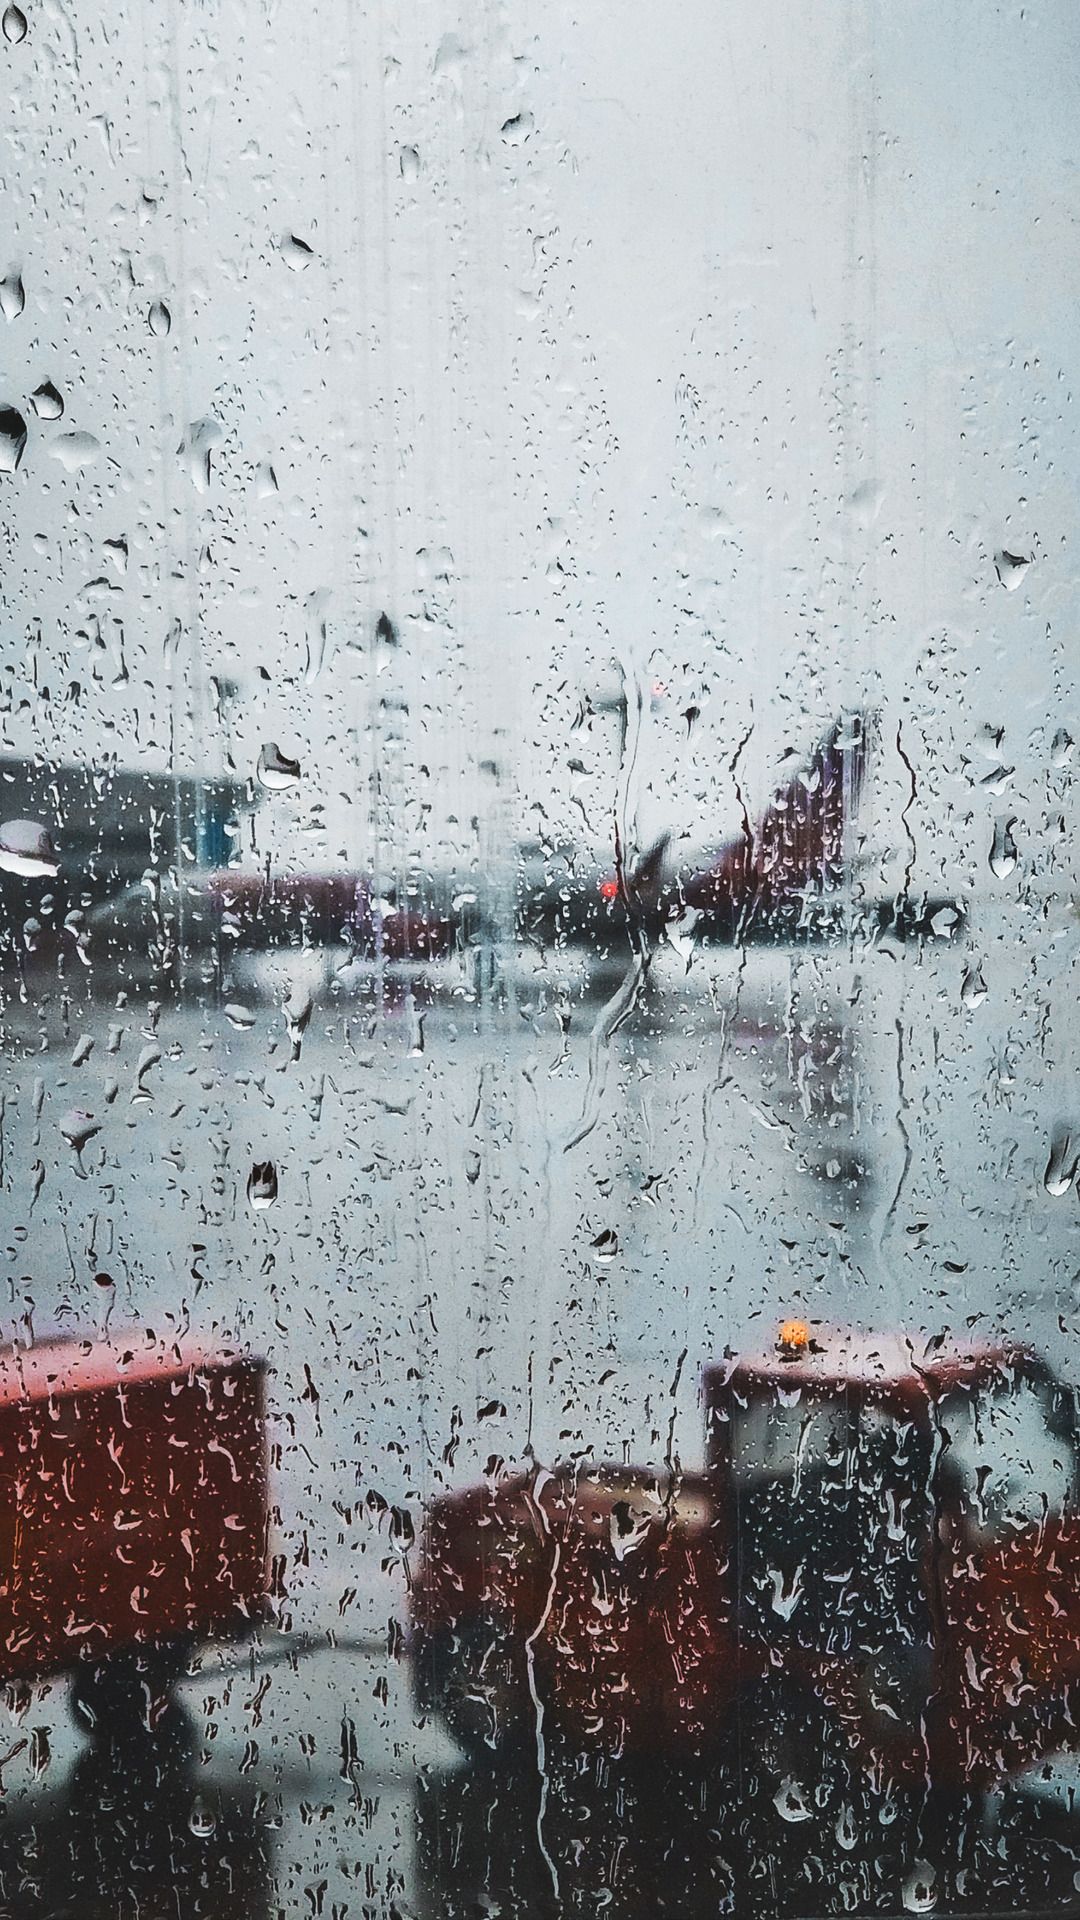 A rain covered window view of an airport - Rain